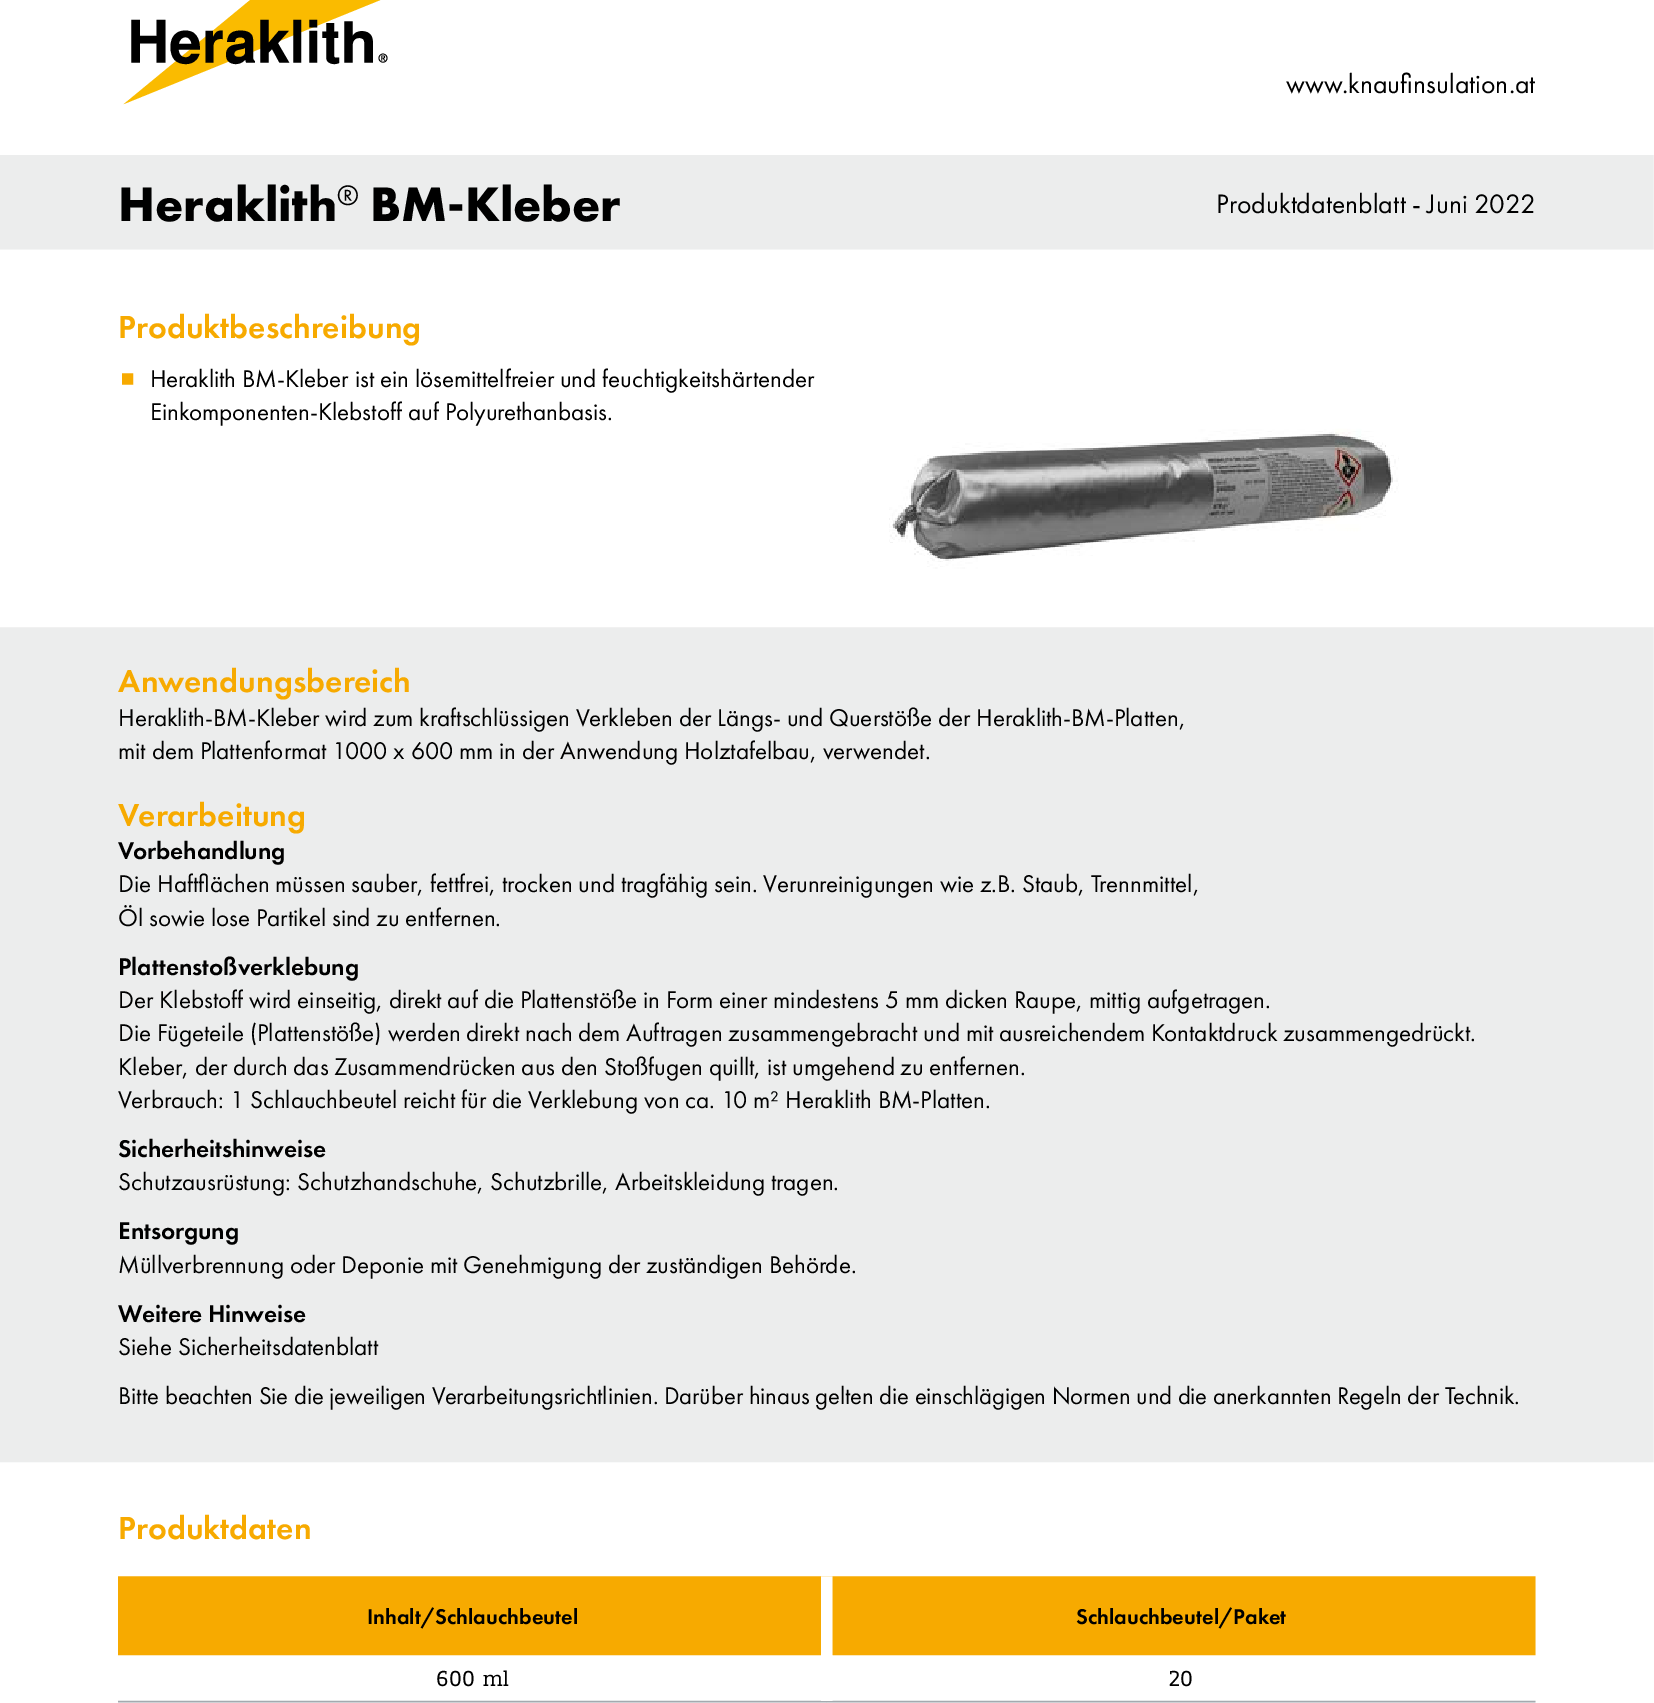 Heraklith BM-Kleber, Produktdatenblatt